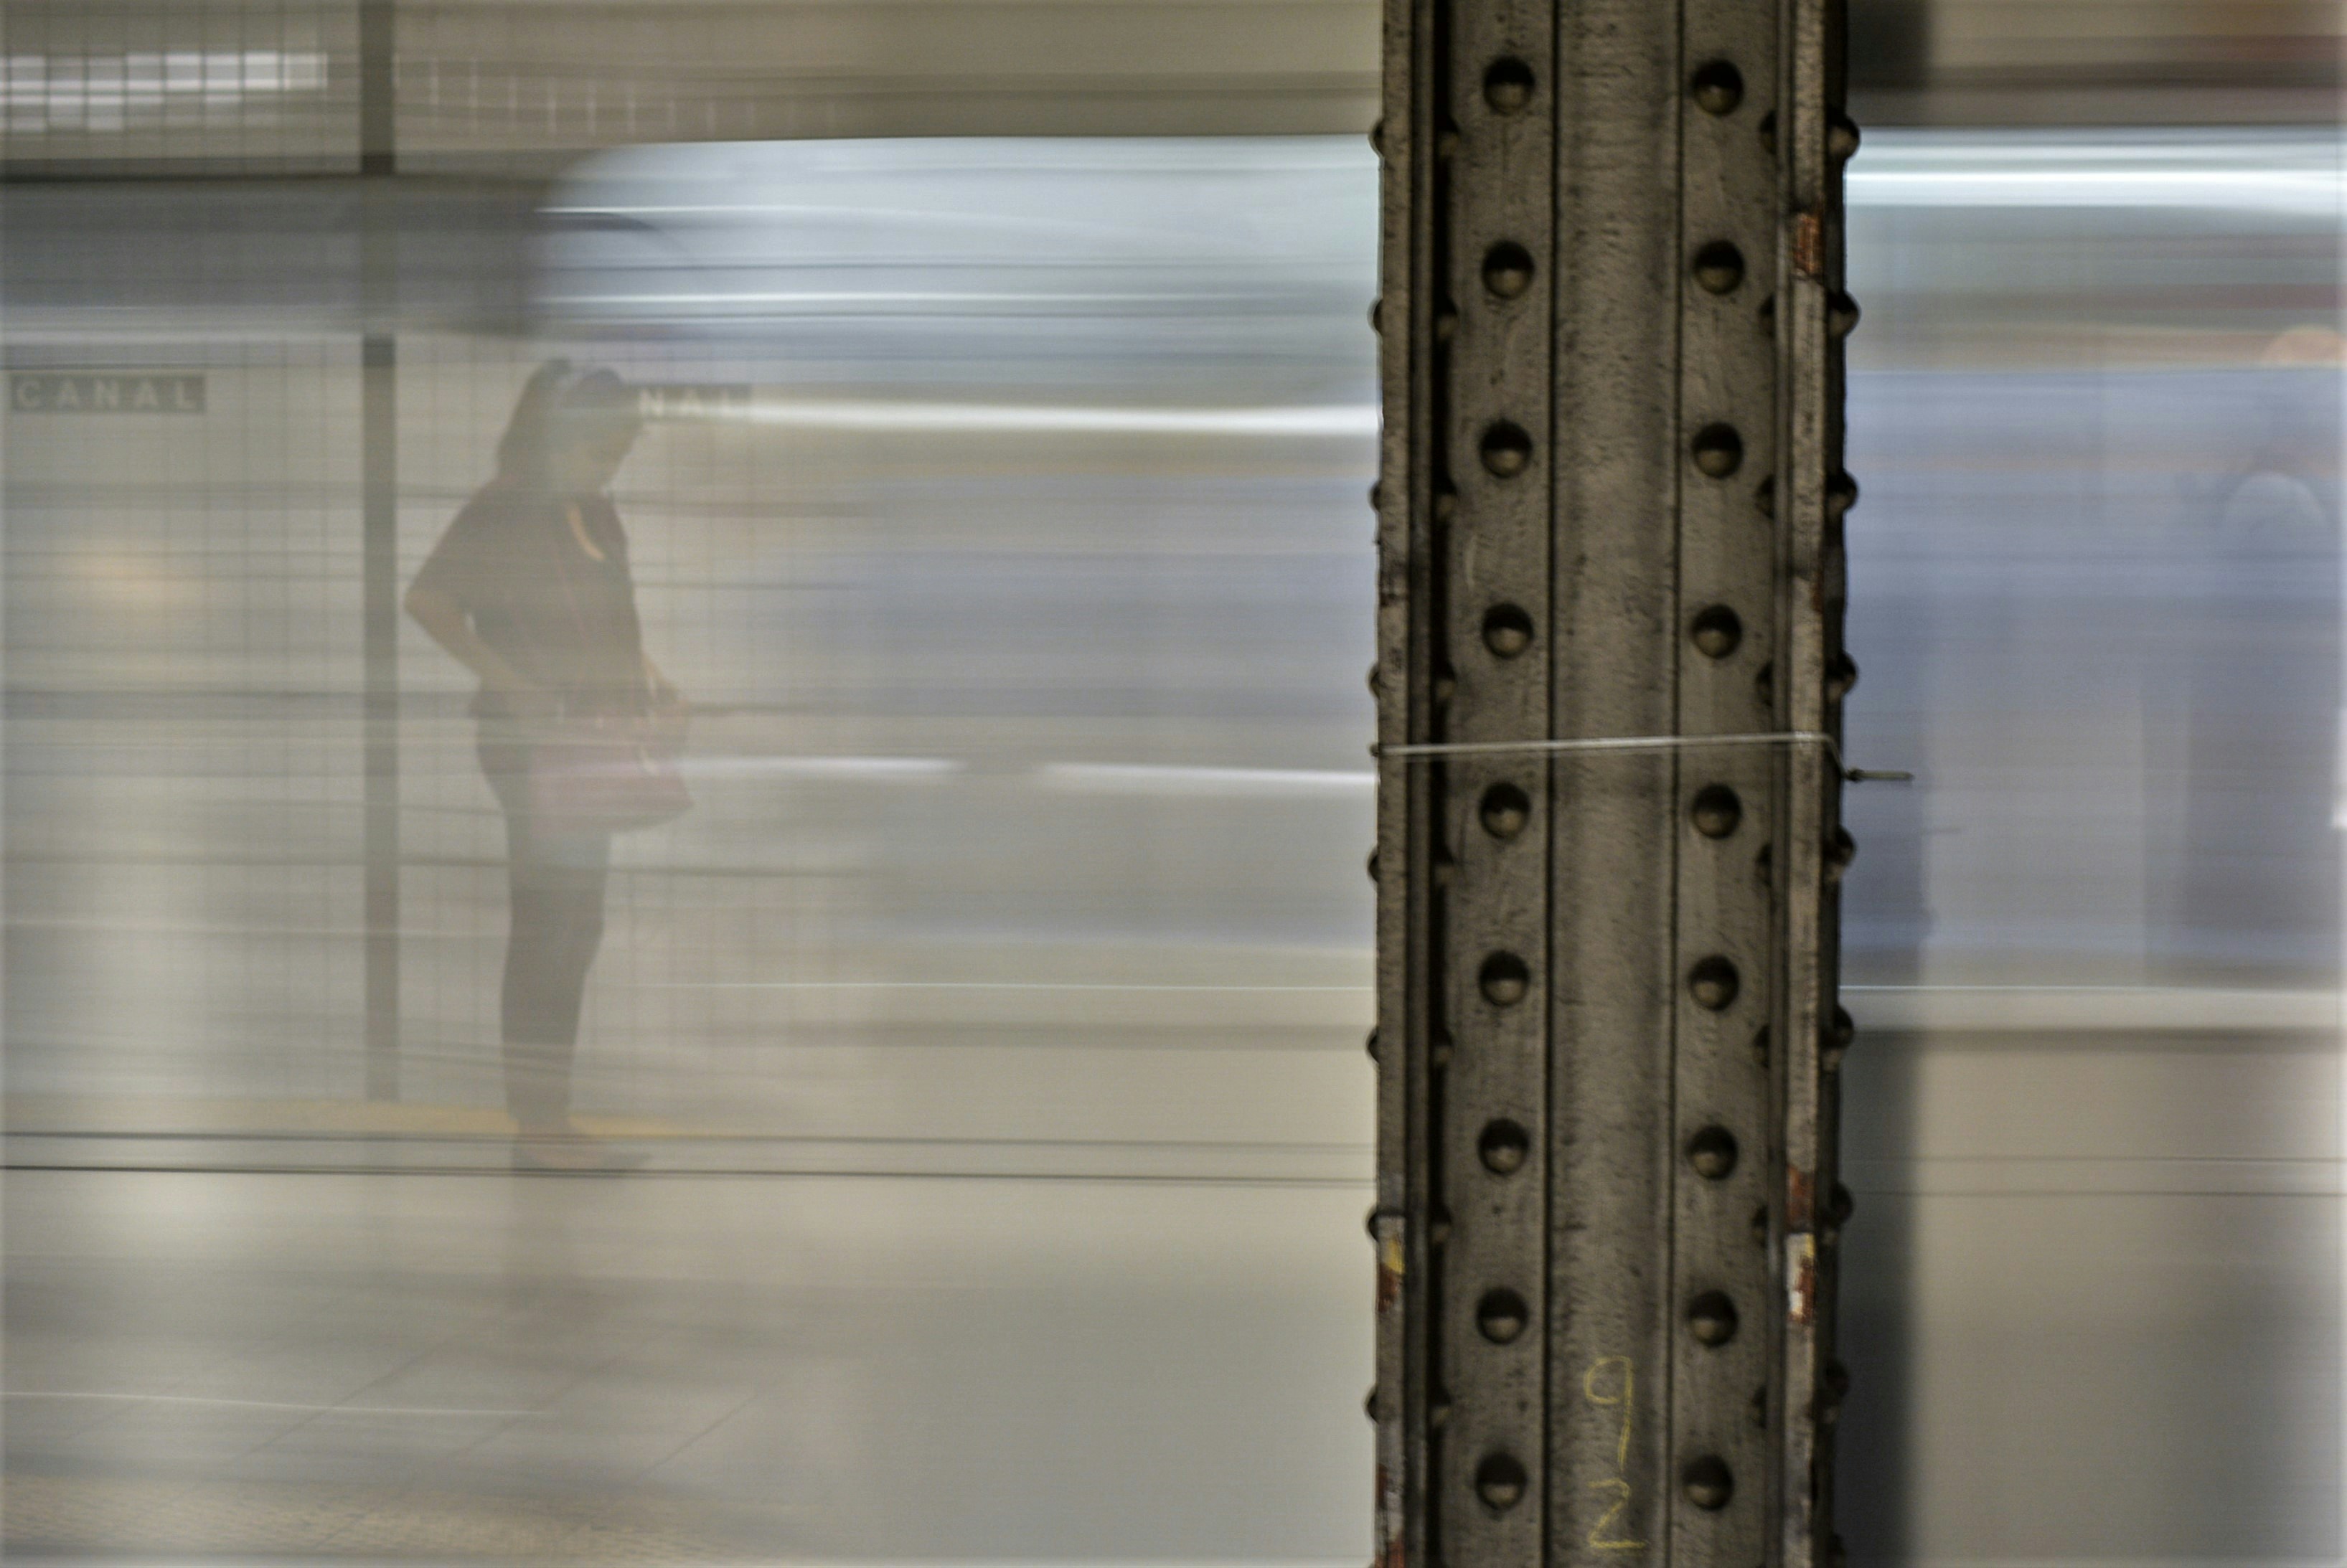 Invisible Subway Train photo by @FlowClark - for more, visit: FlowClark.com